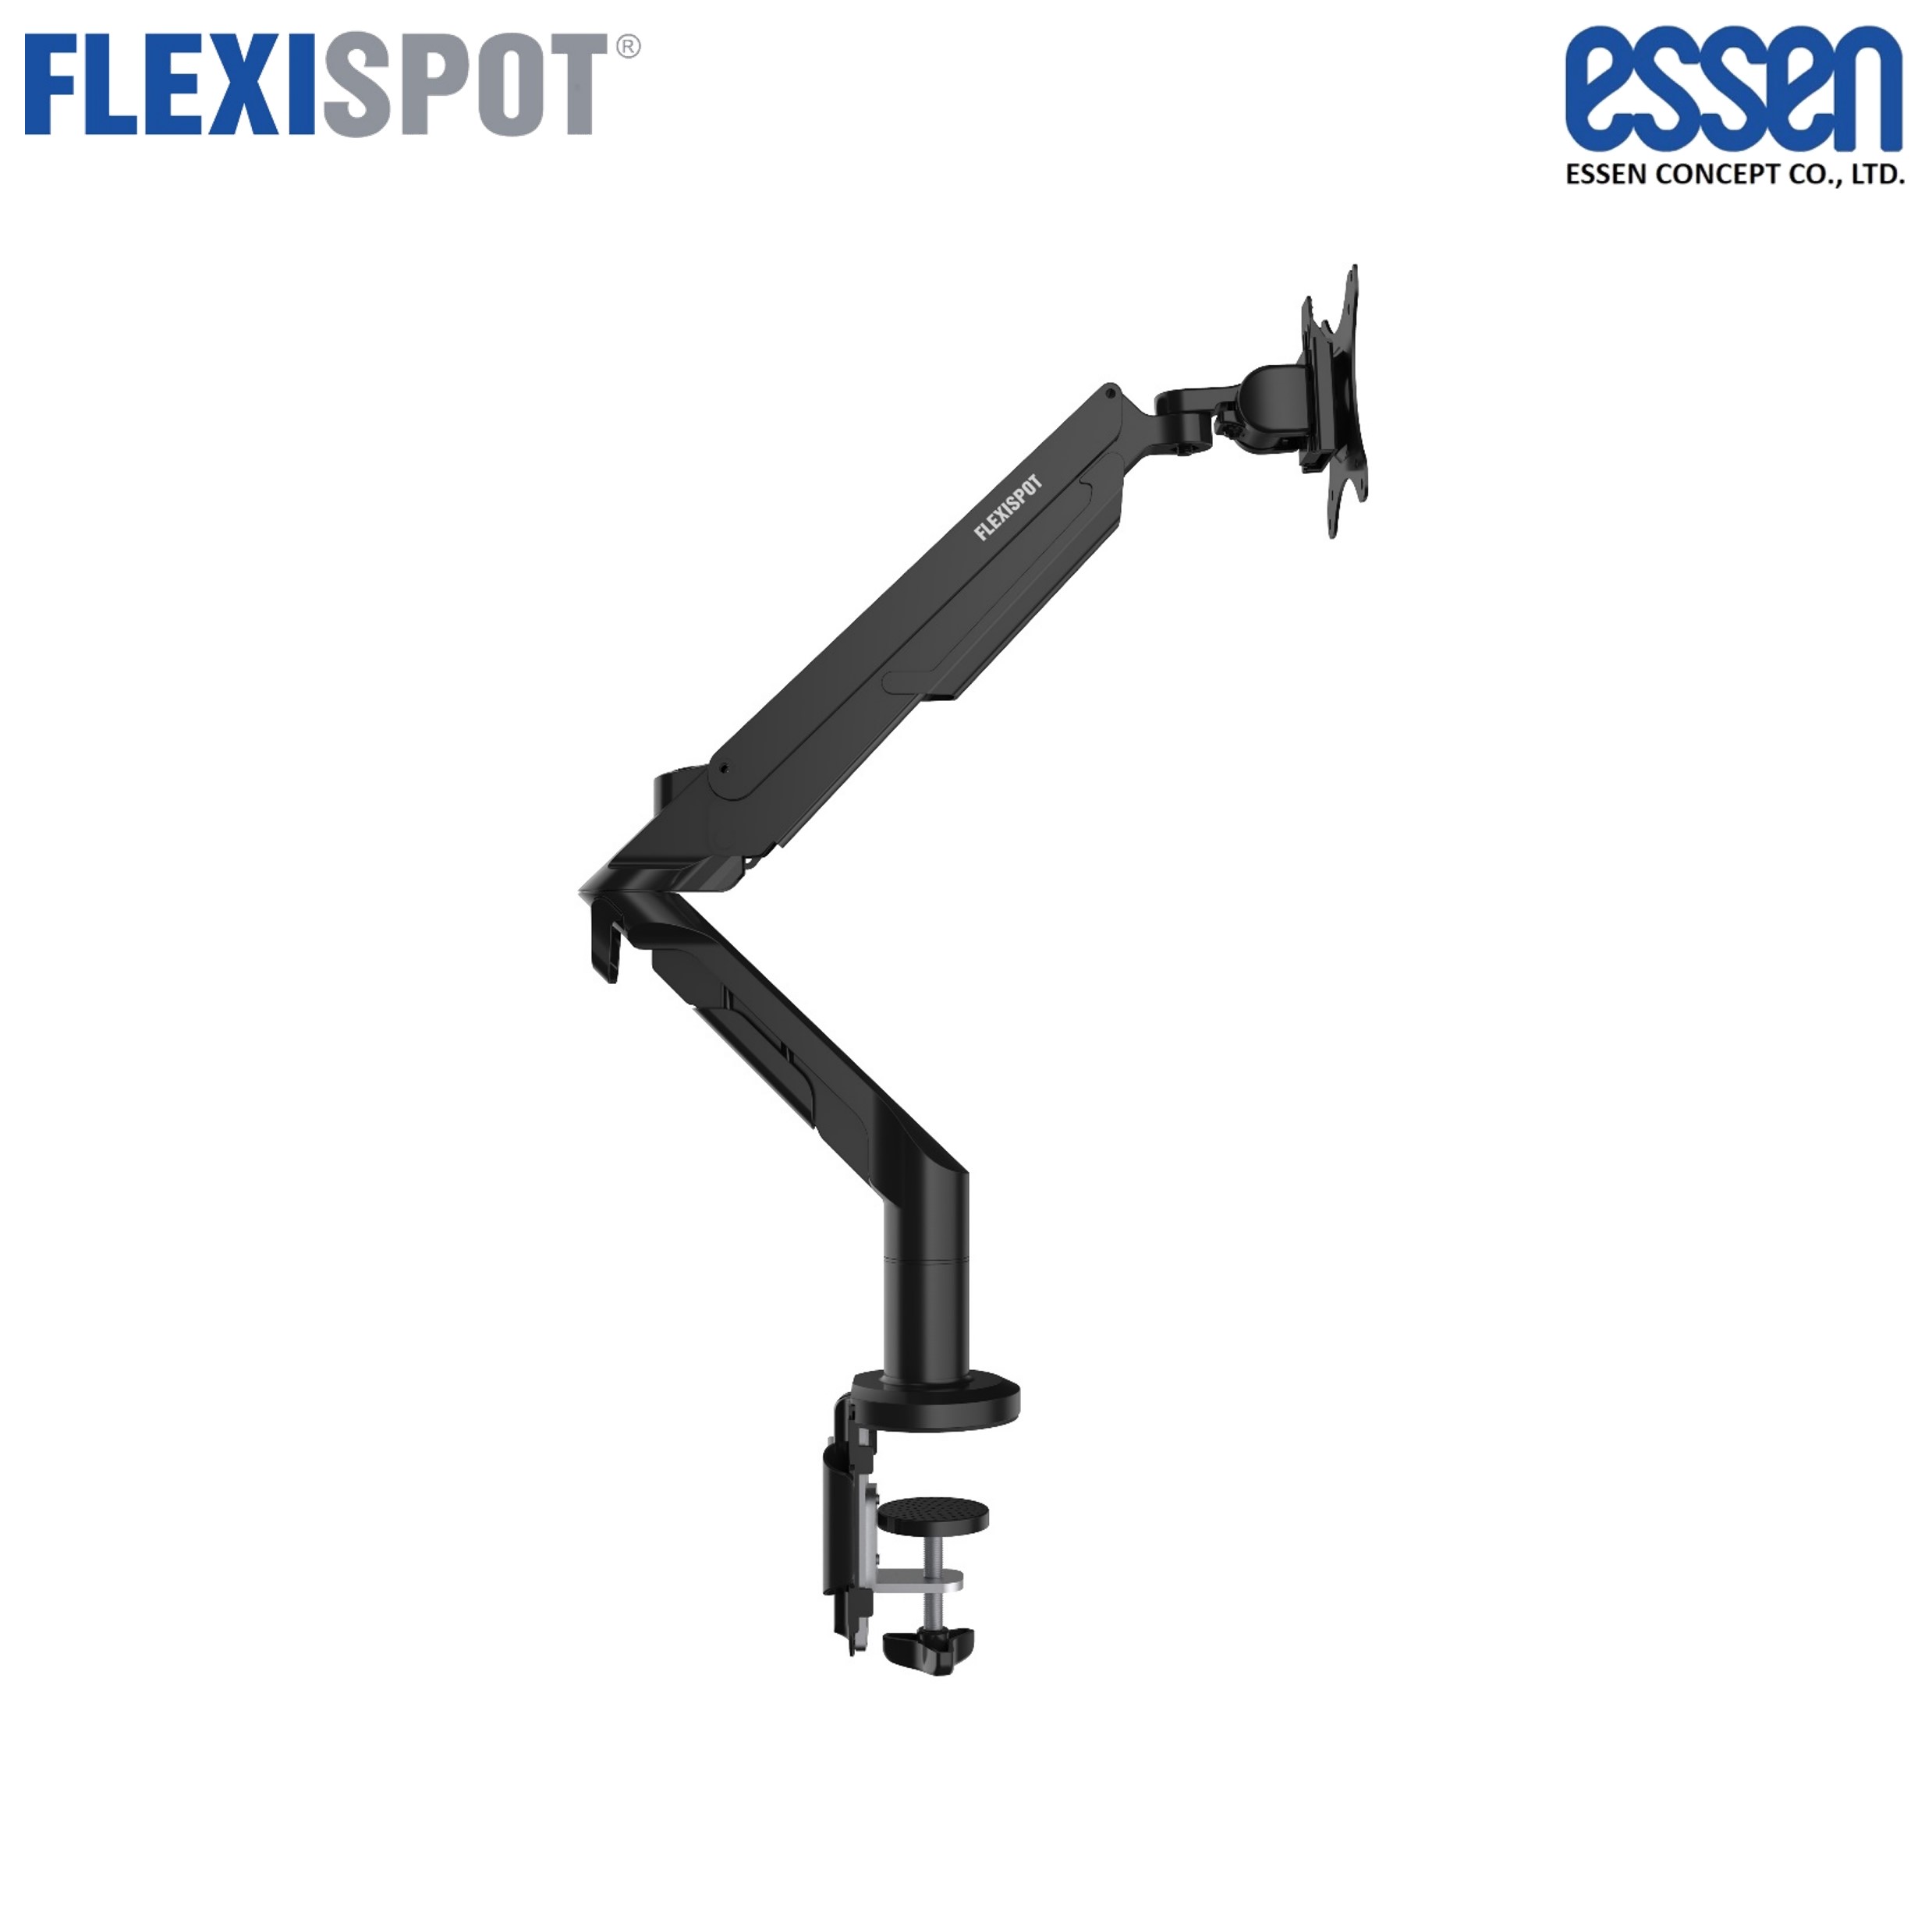 FlexiSpot by Essen ขาติดหน้าจอมอนิเตอร์แบบเดี่ยว รุ่น MA8 - สีดำ